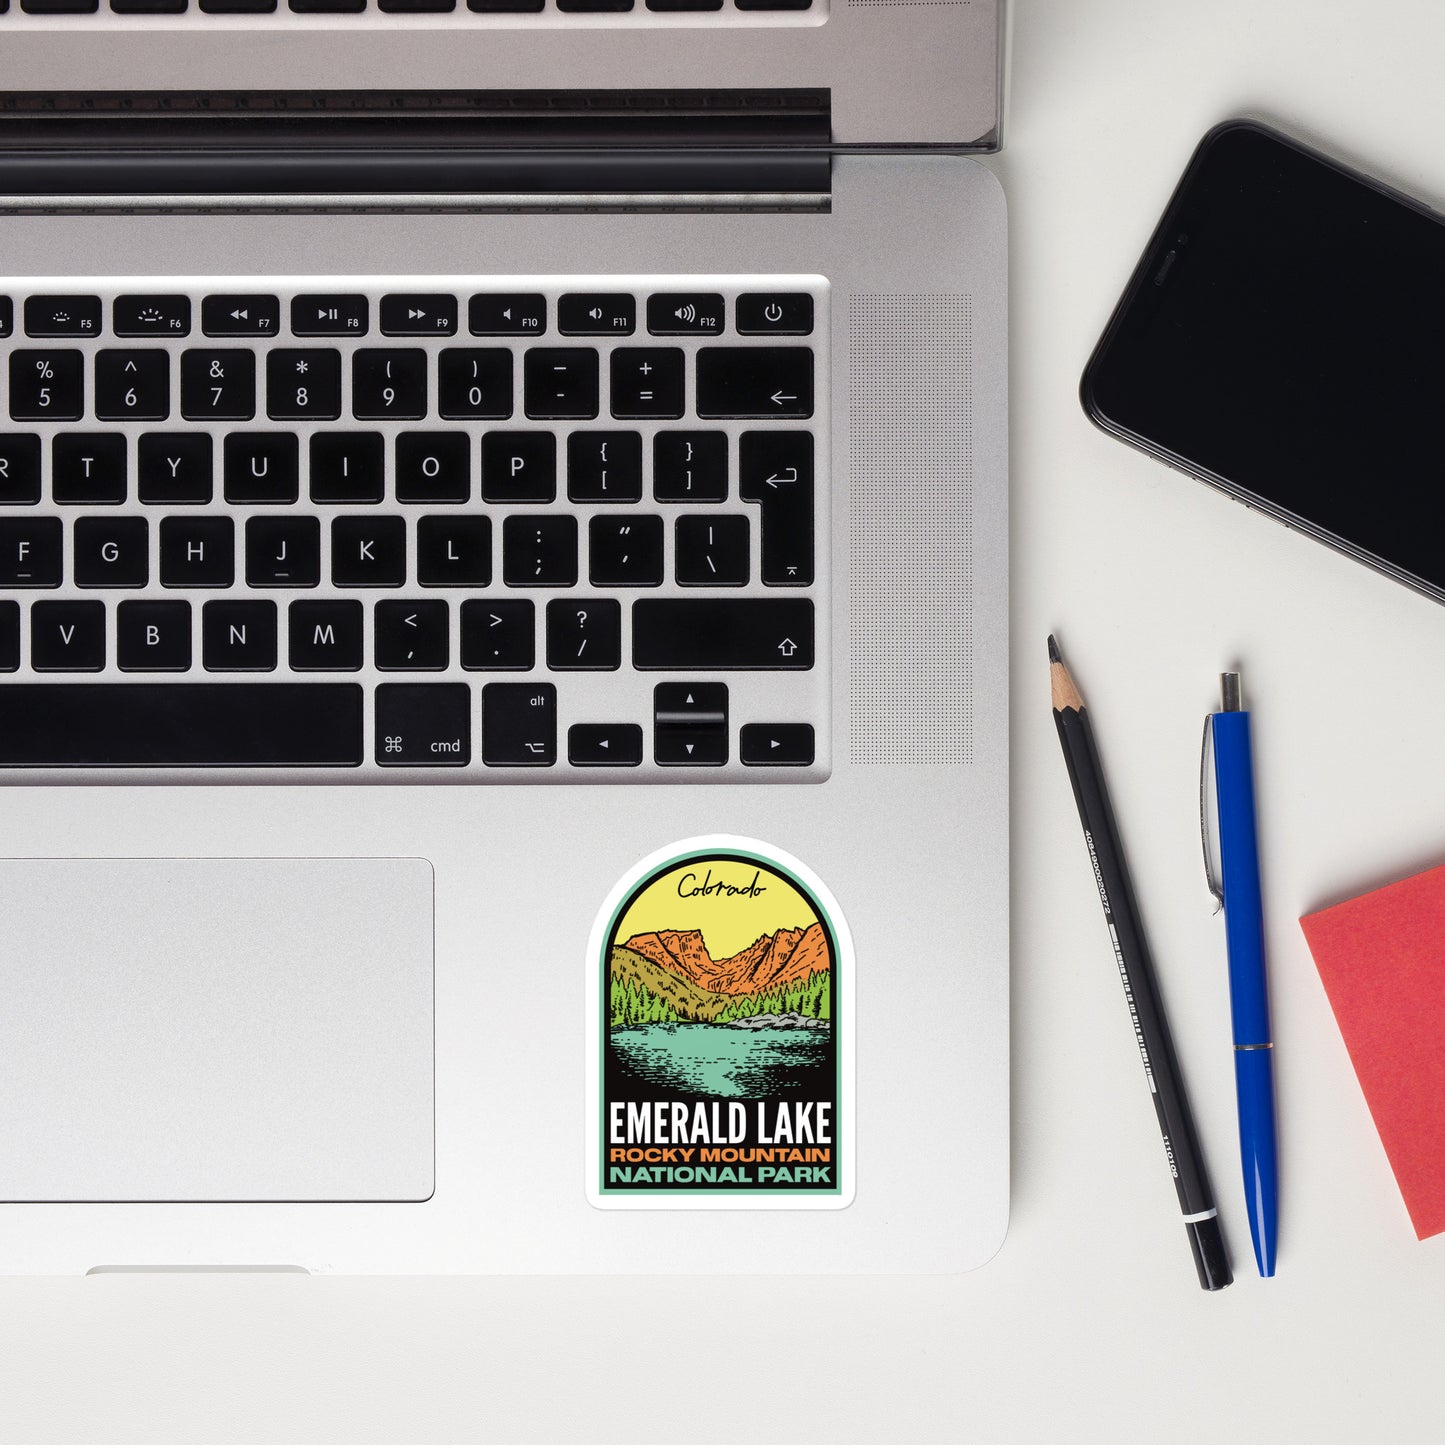 A sticker of Emerald Lake Colorado on a laptop